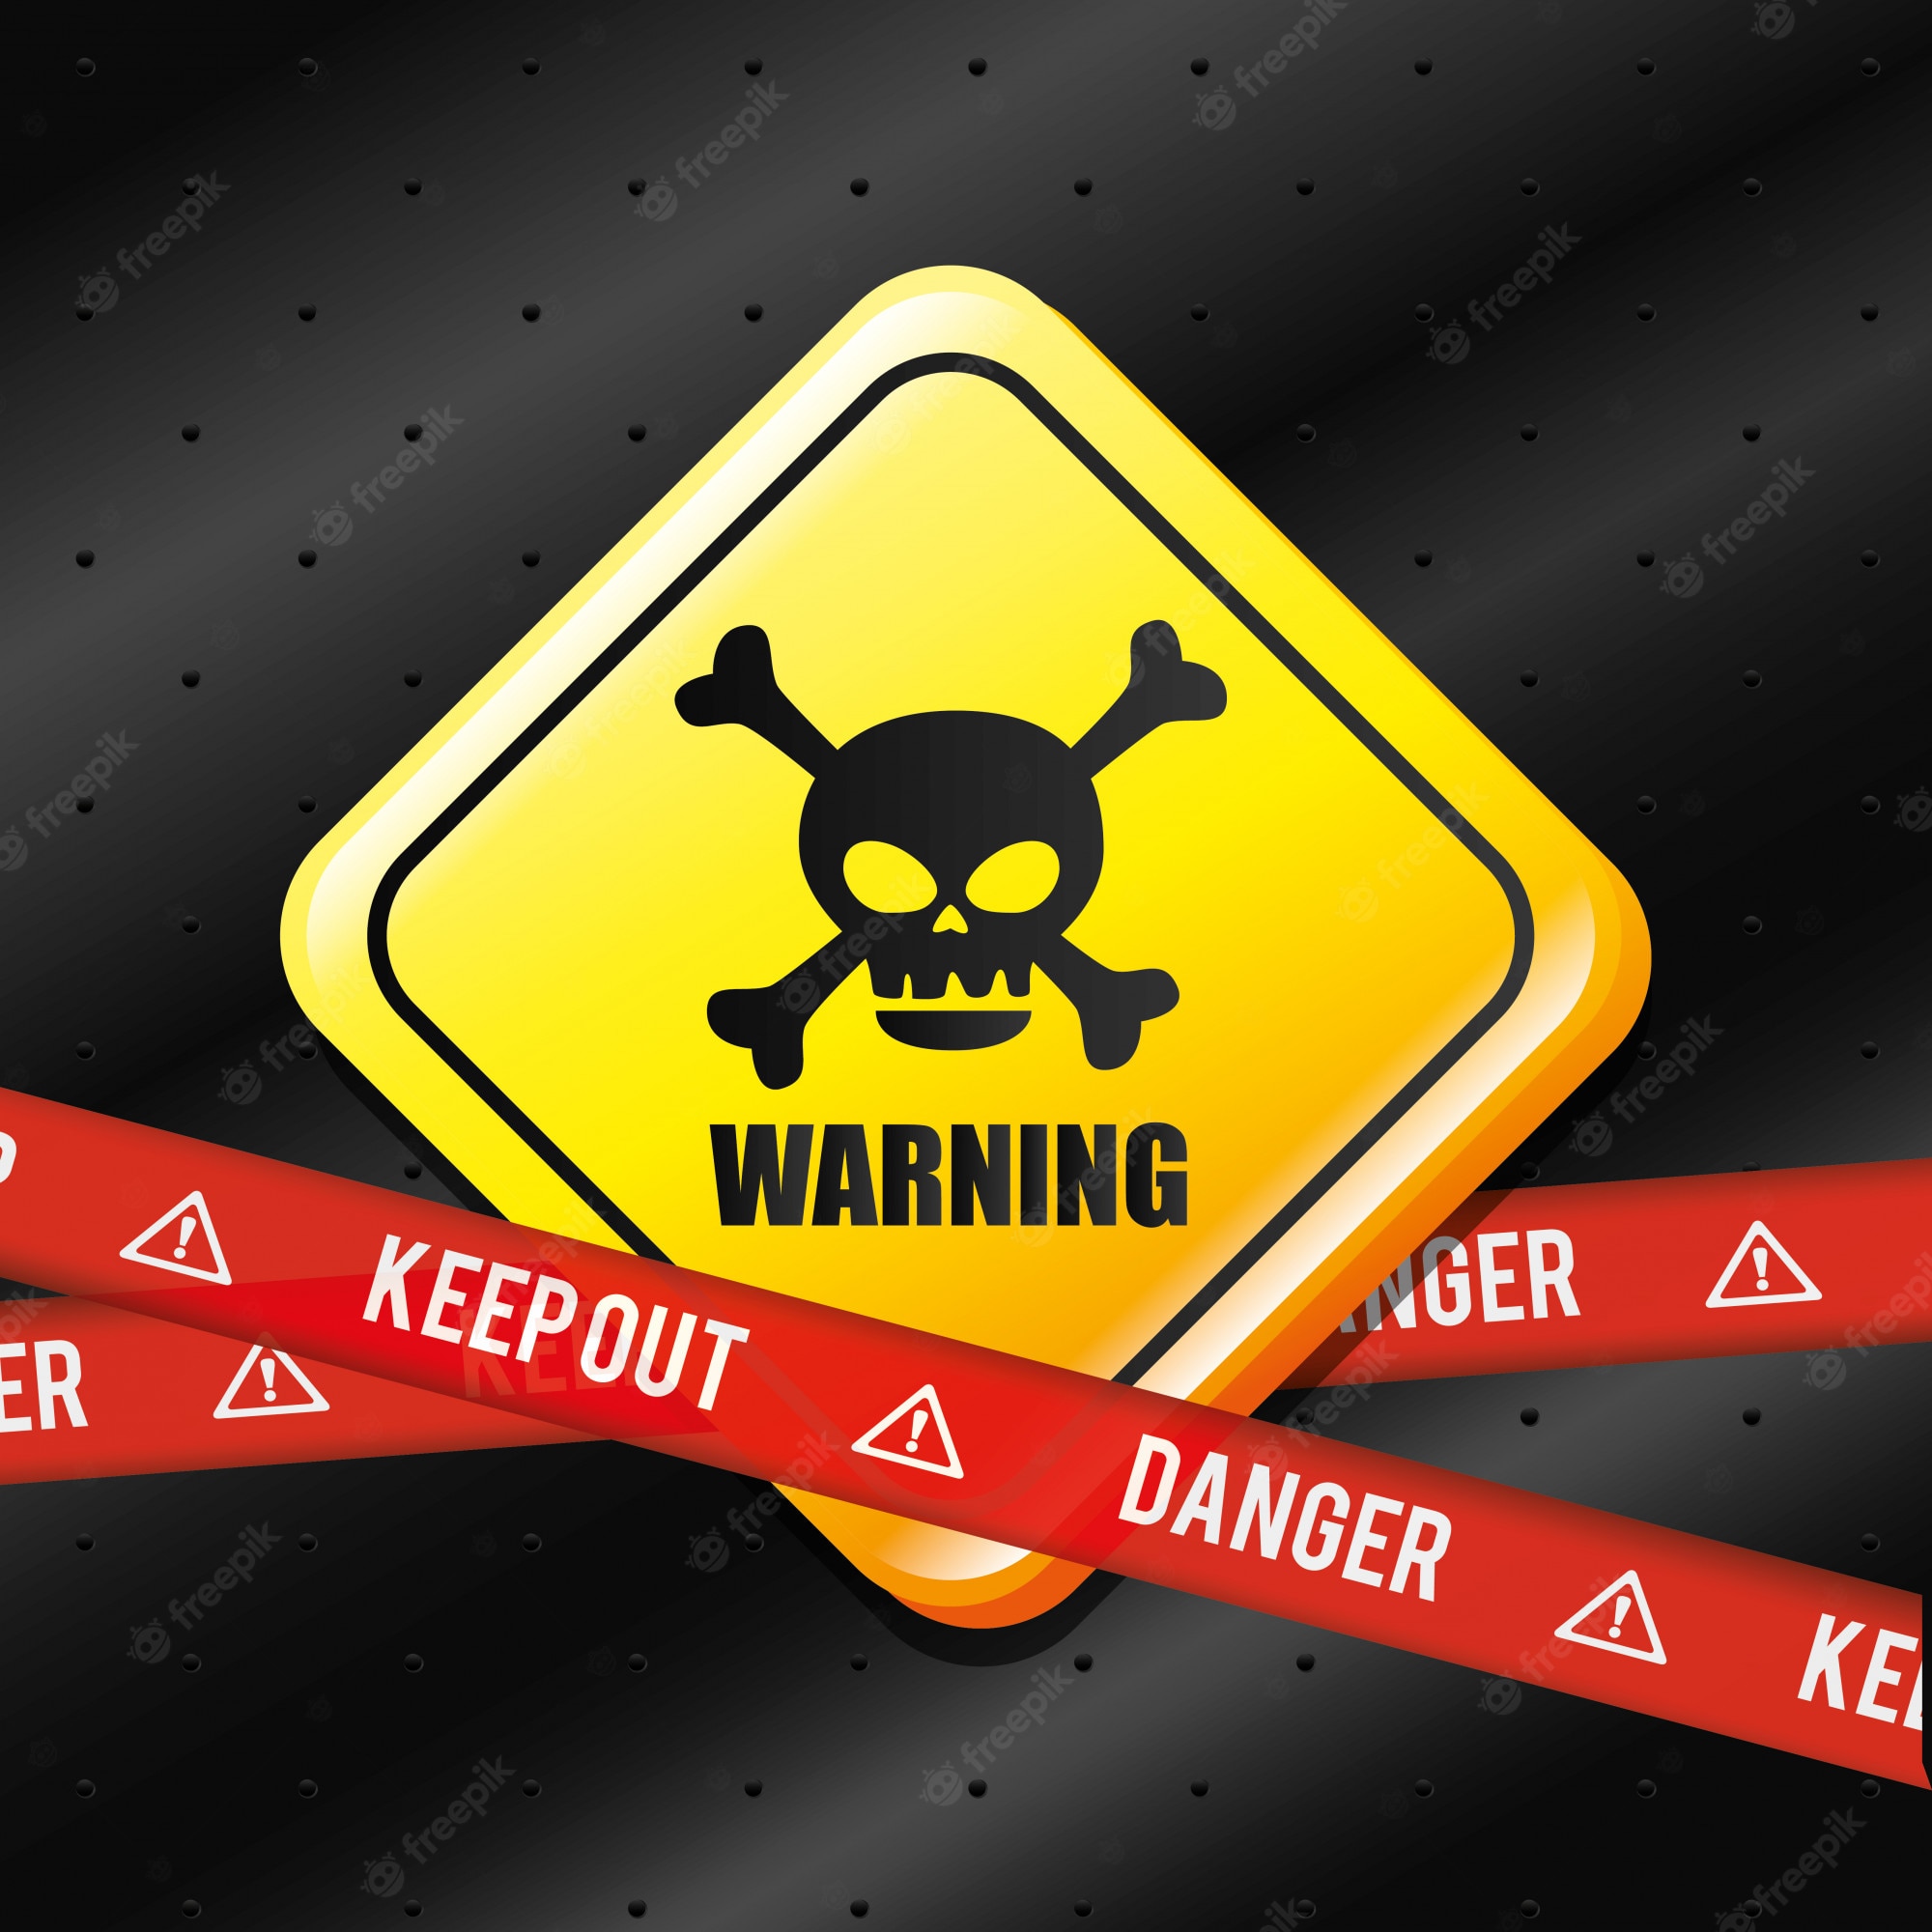 Danger Skull Free Download Wallpapers